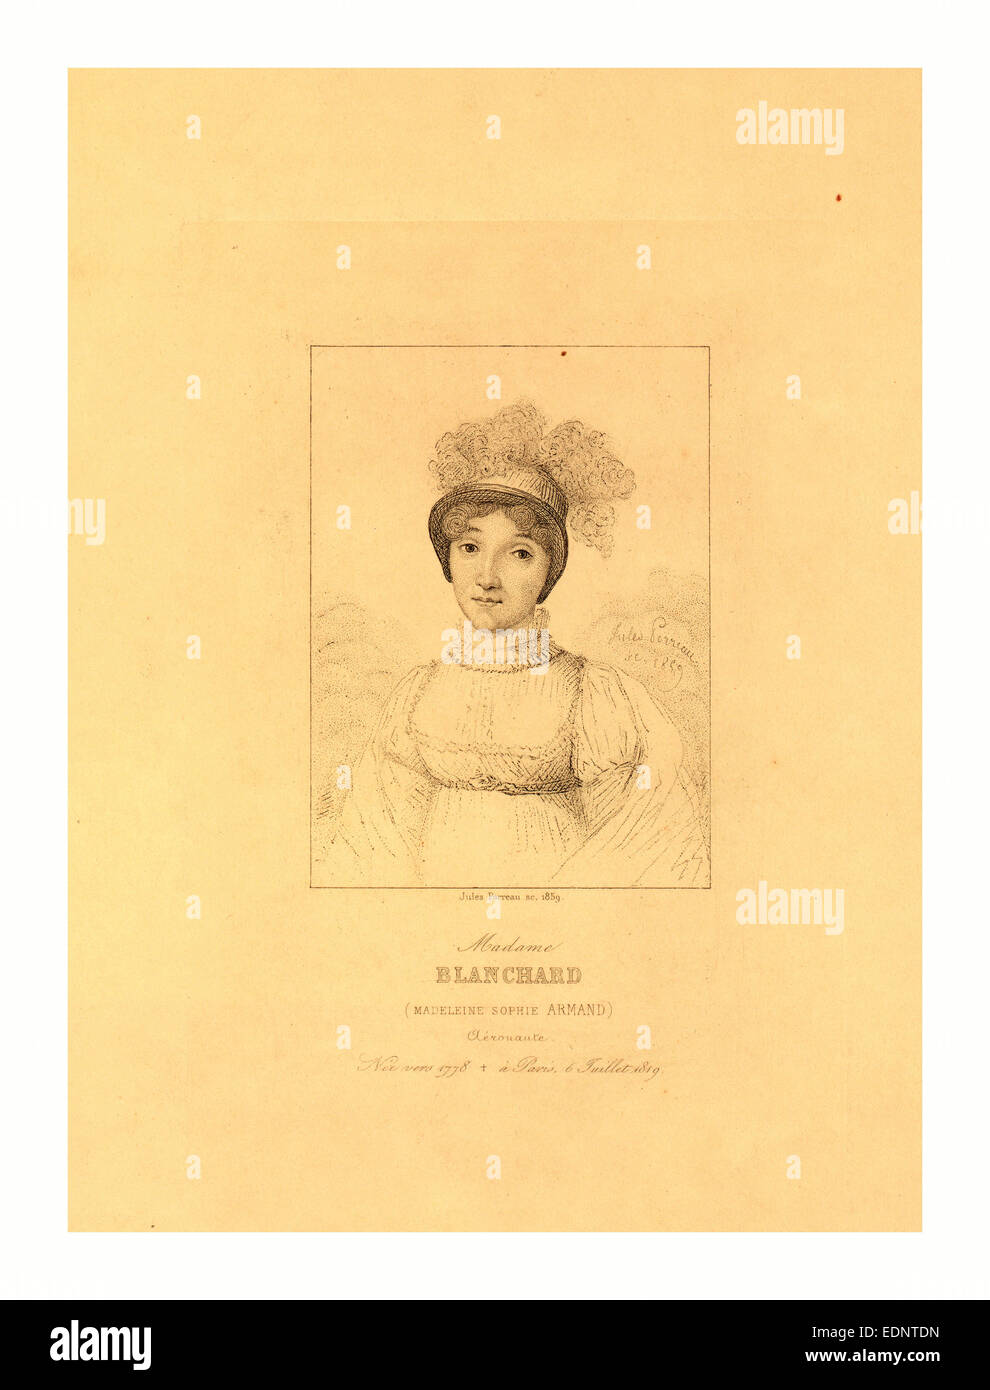 Madame Blanchard (Madeleine Sophie Armand) French aeronaut,  Jules Porreau, sc., 1859 Stock Photo